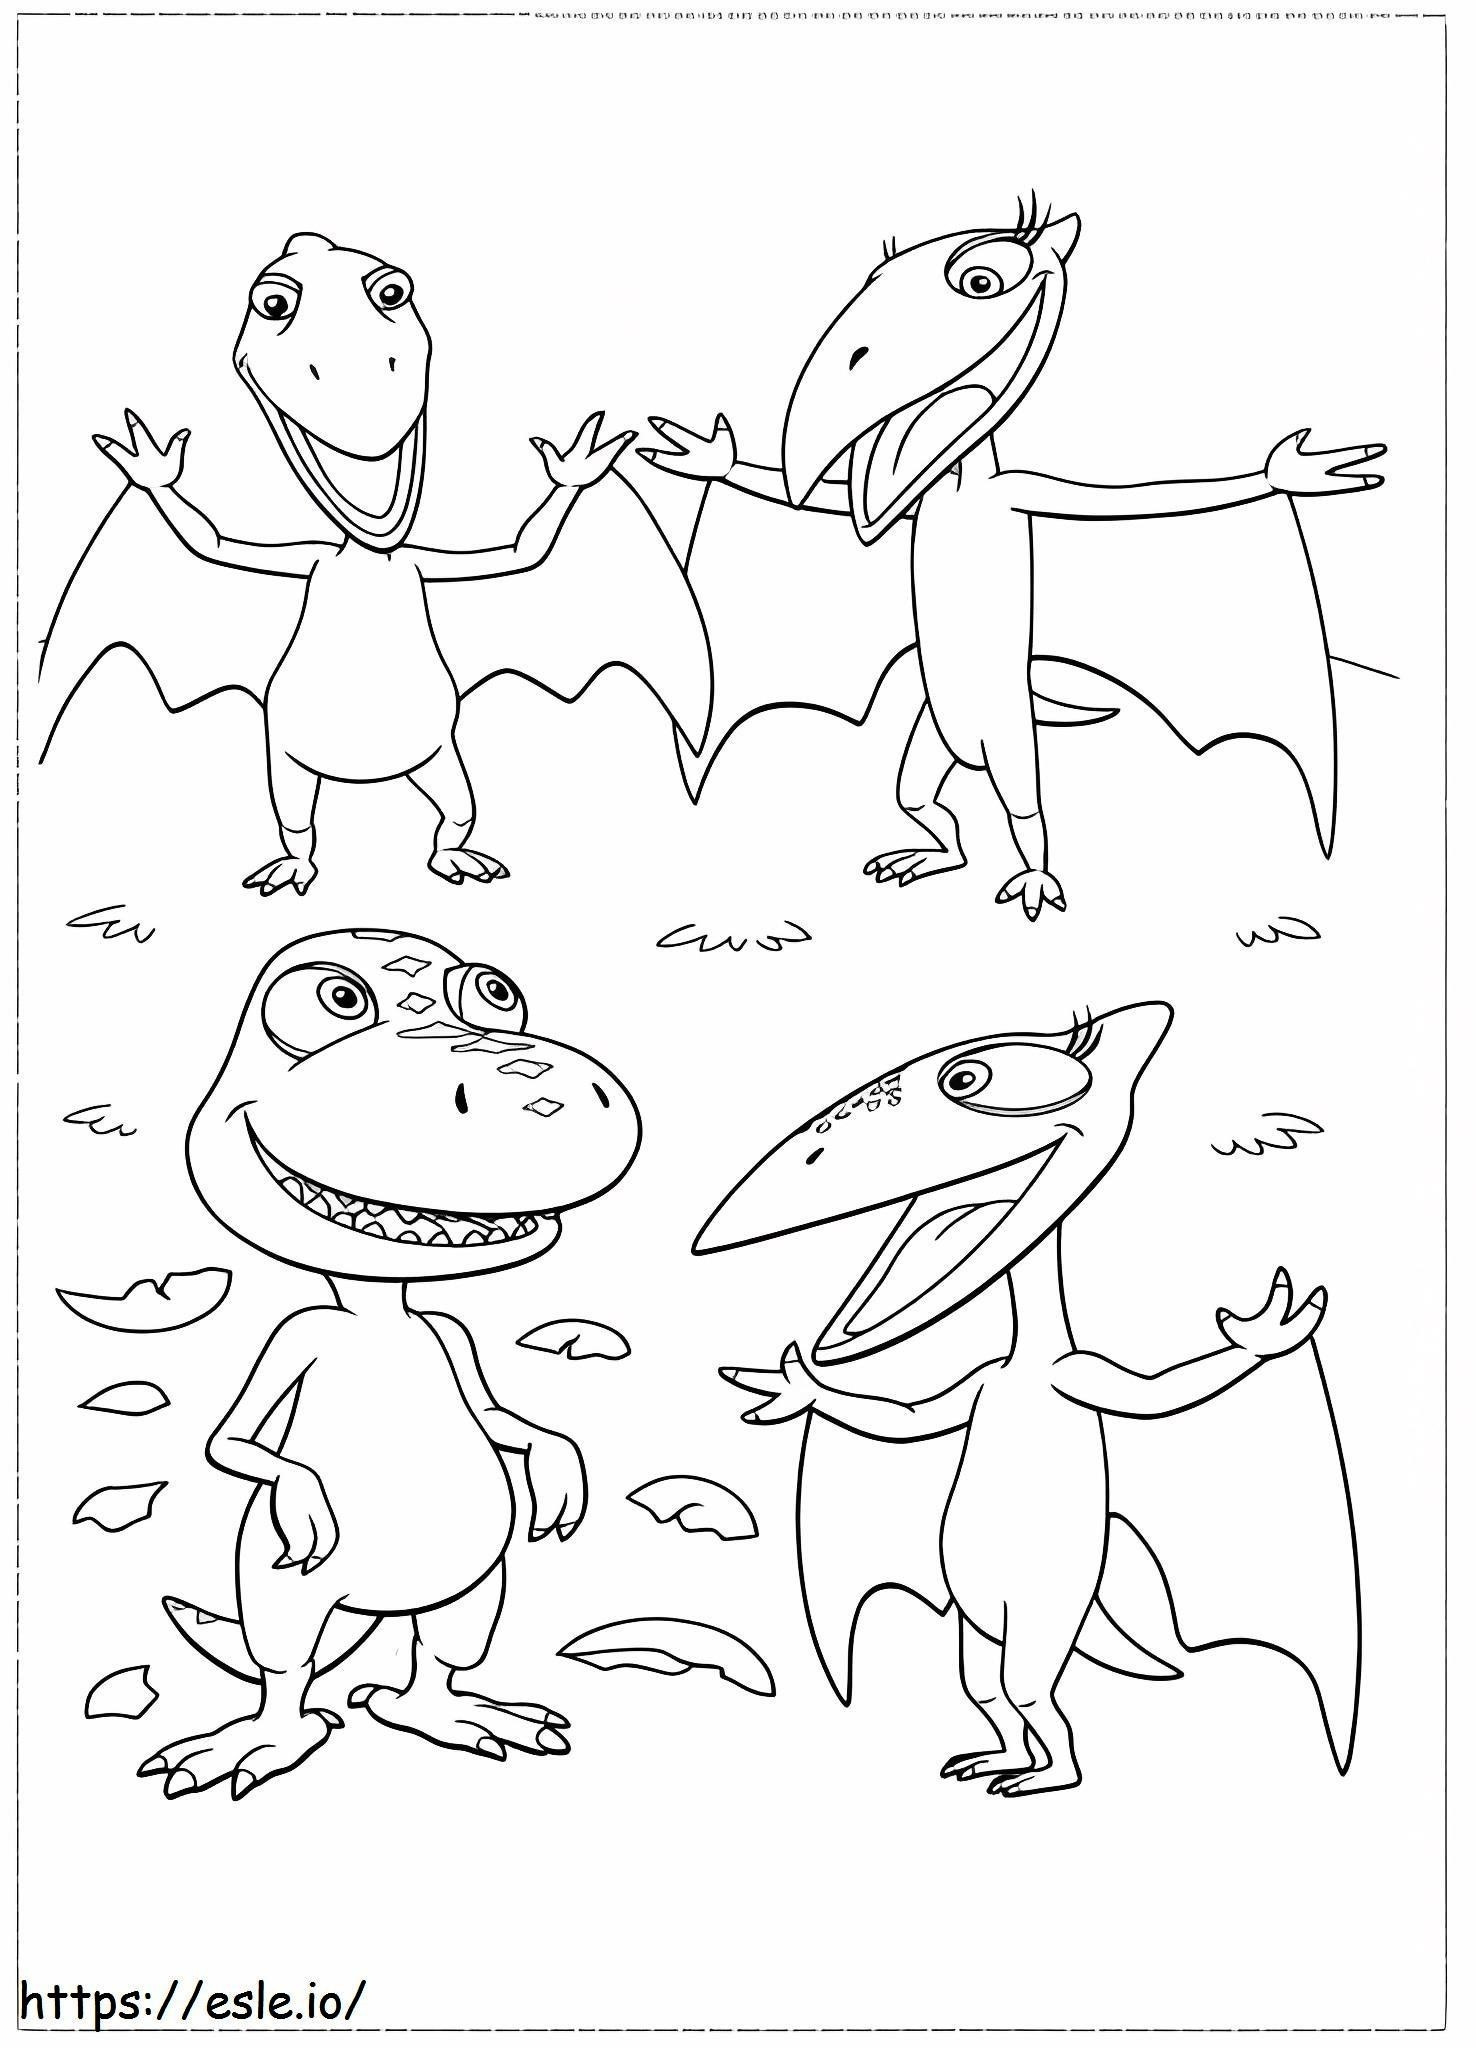 Fun Dinosaur coloring page